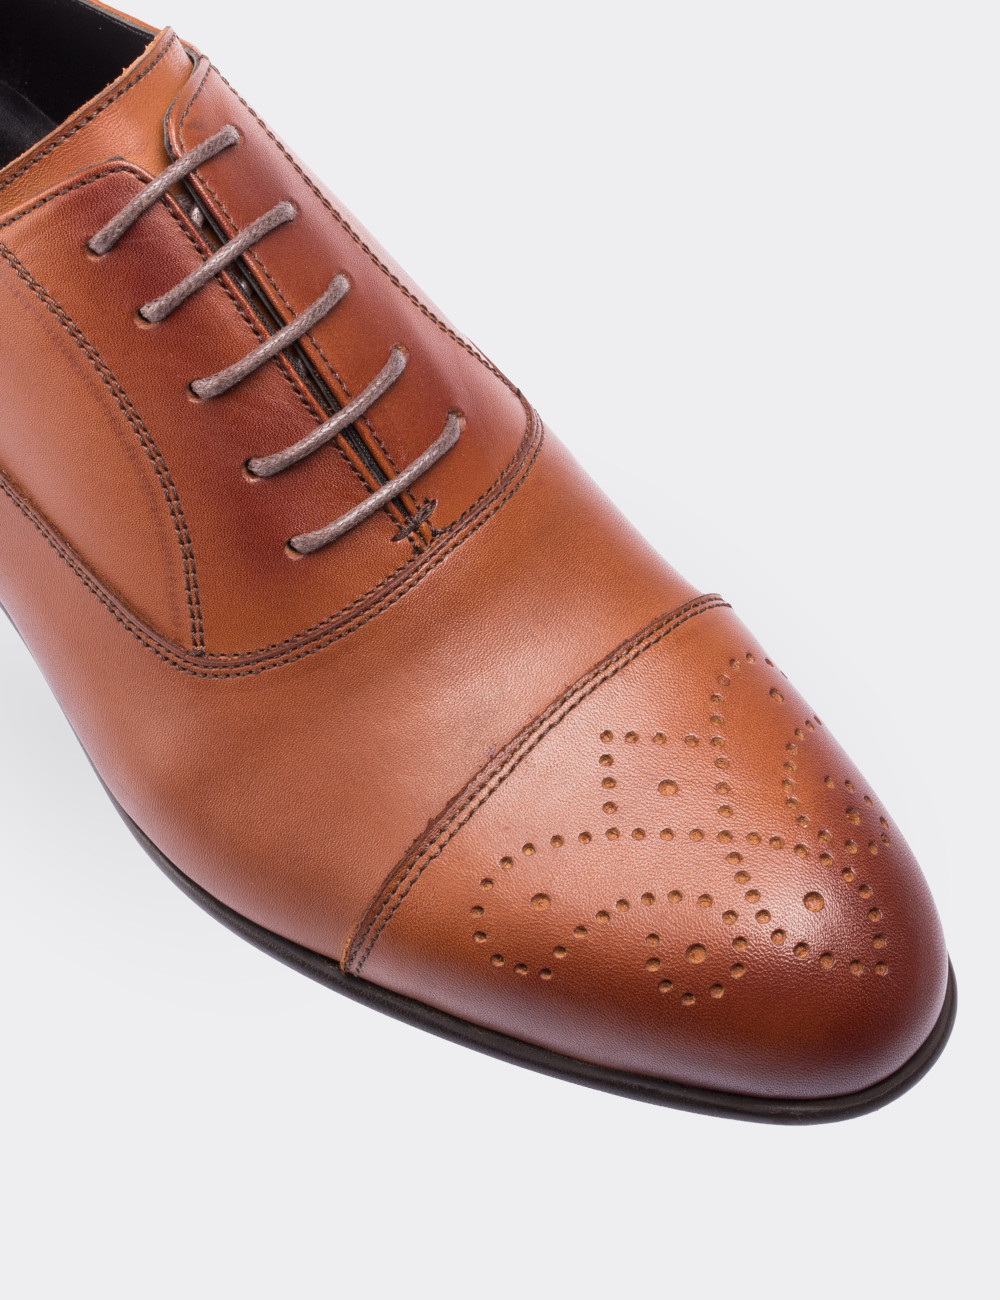 Tan  Leather Classic Shoes - 00741MTBAN02